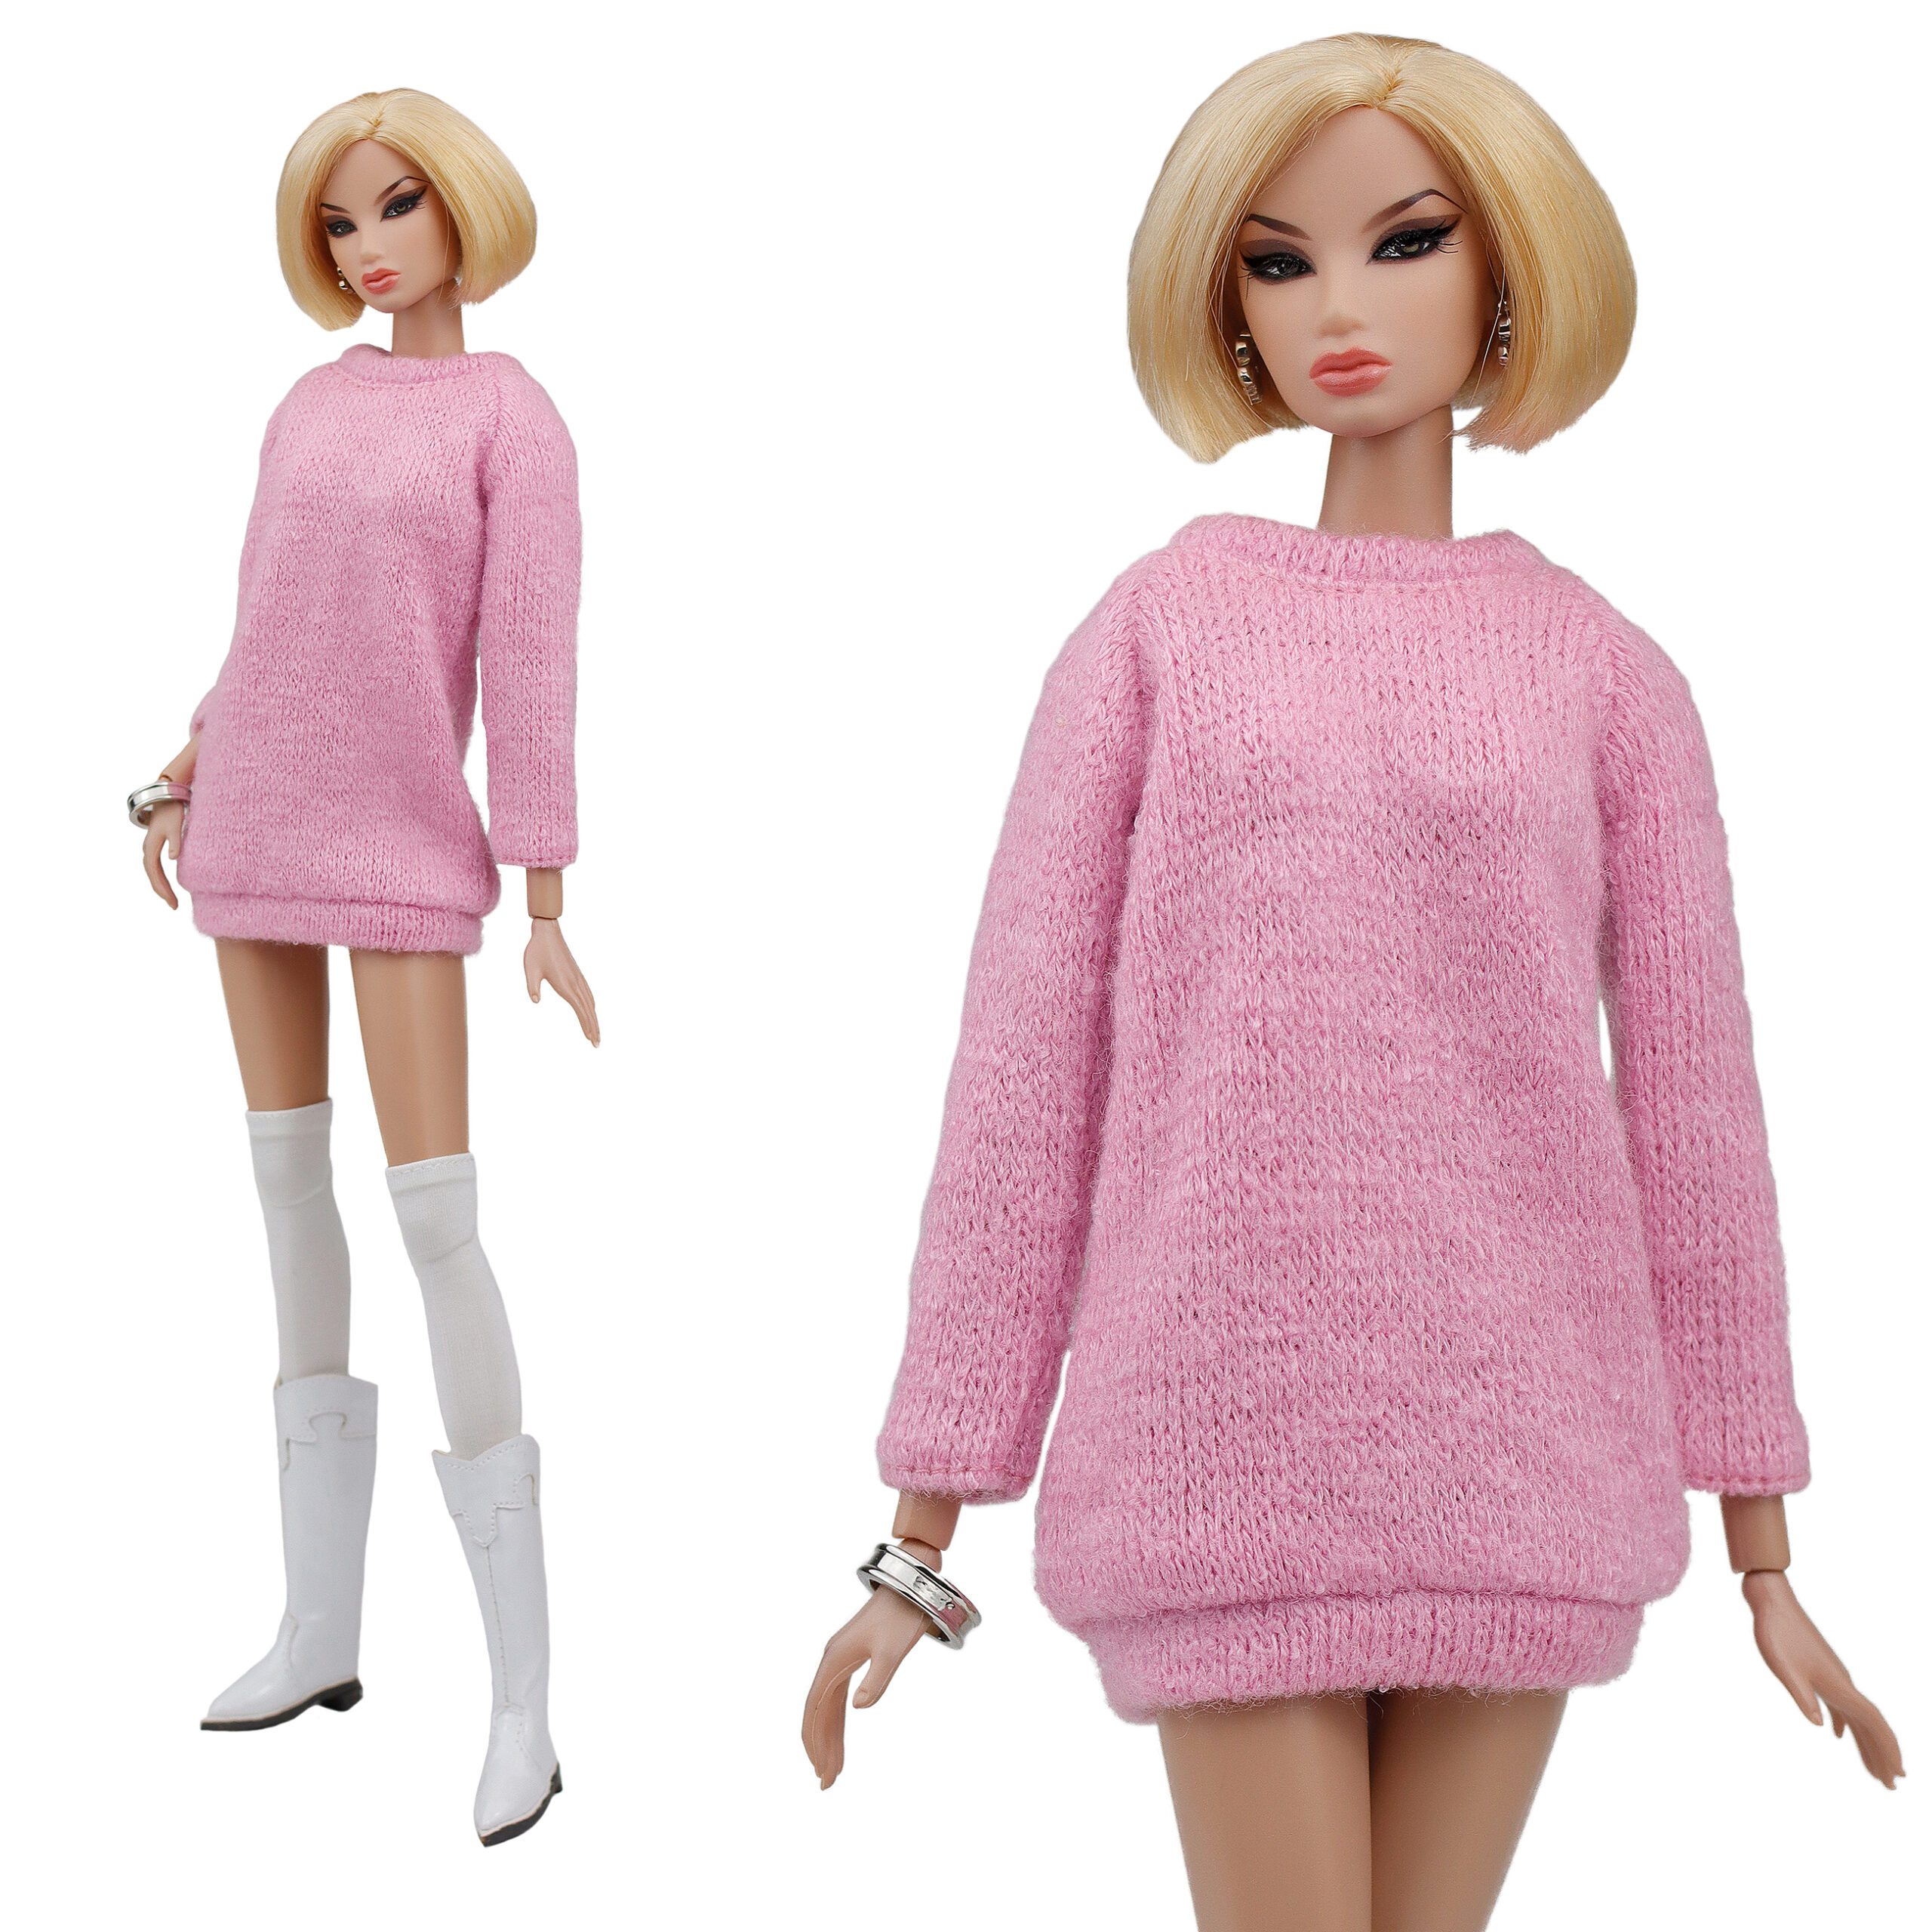 Silver tunic & pink leggings, Liv Dolls Wiki